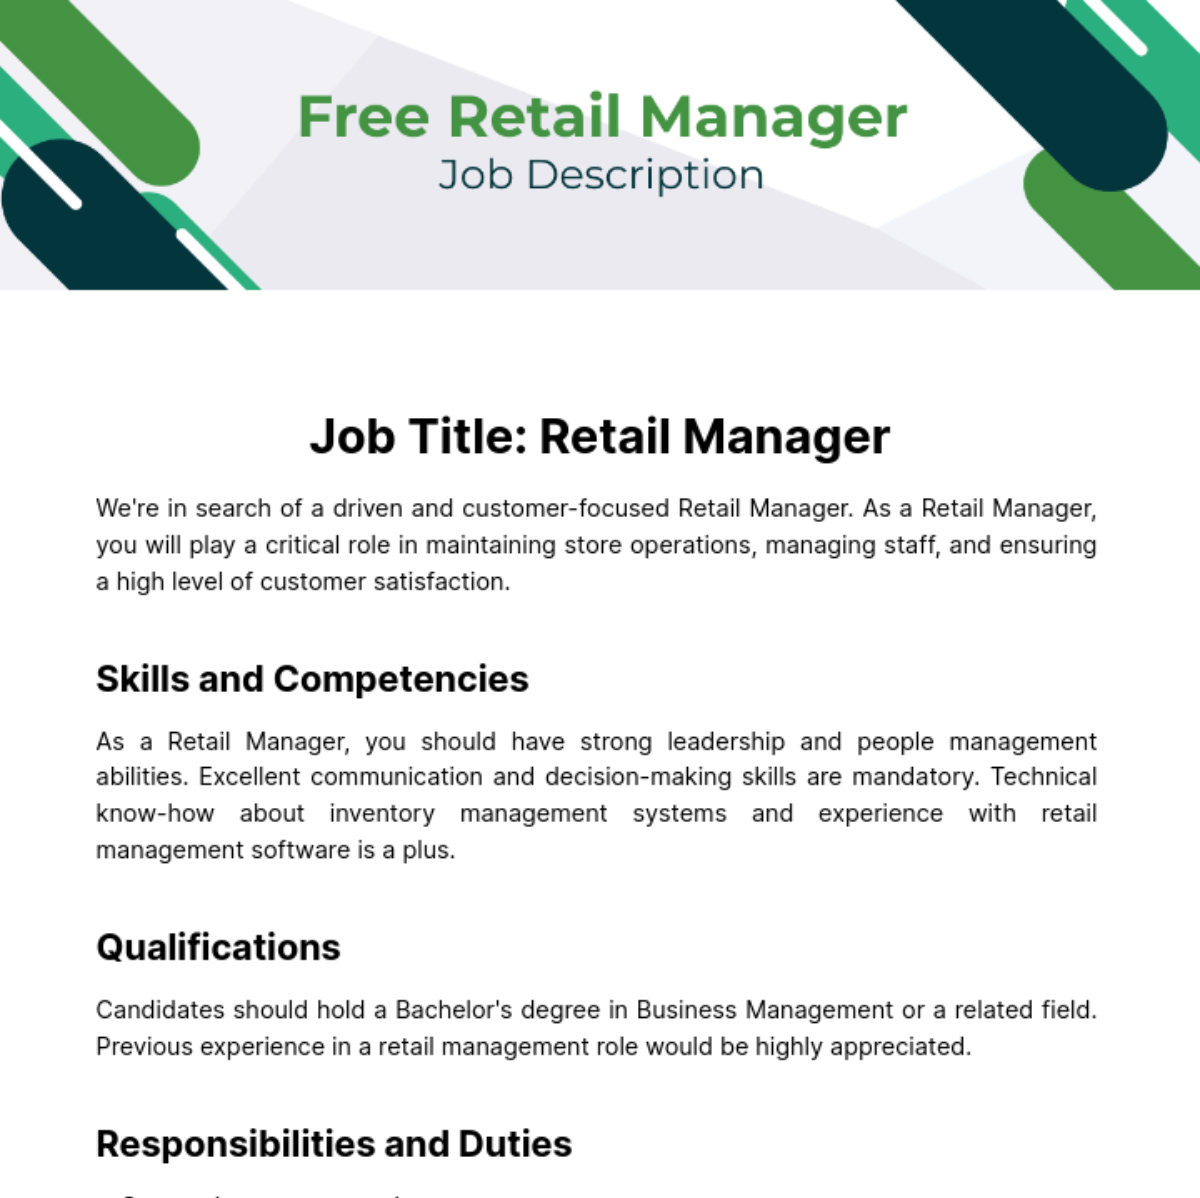 Free Retail Manager Job Description Template